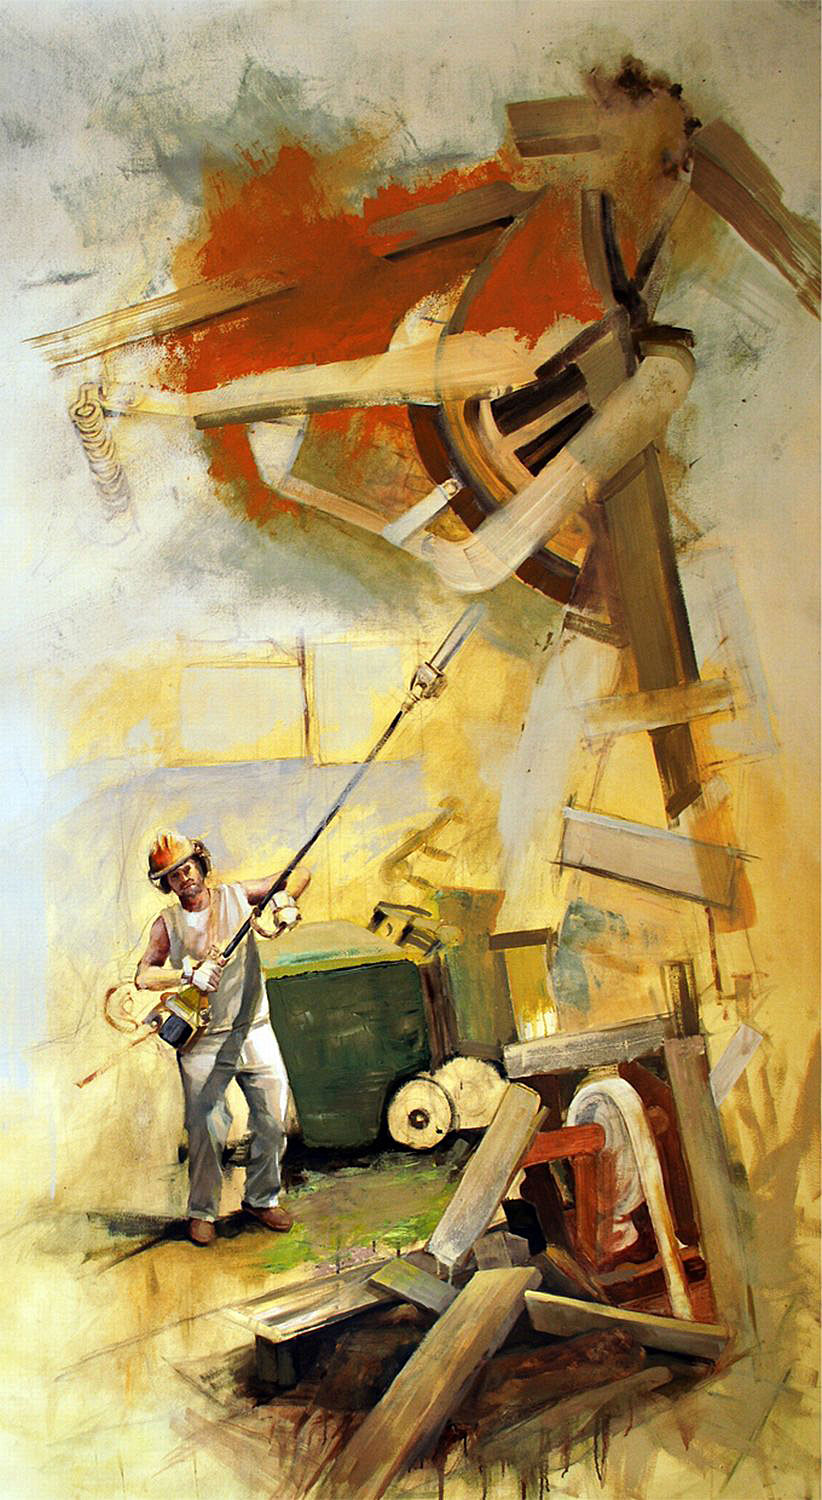 Nicholas Scrimenti, Construction, 2012. Oil and acrylic on paper, 73 x 42 in.